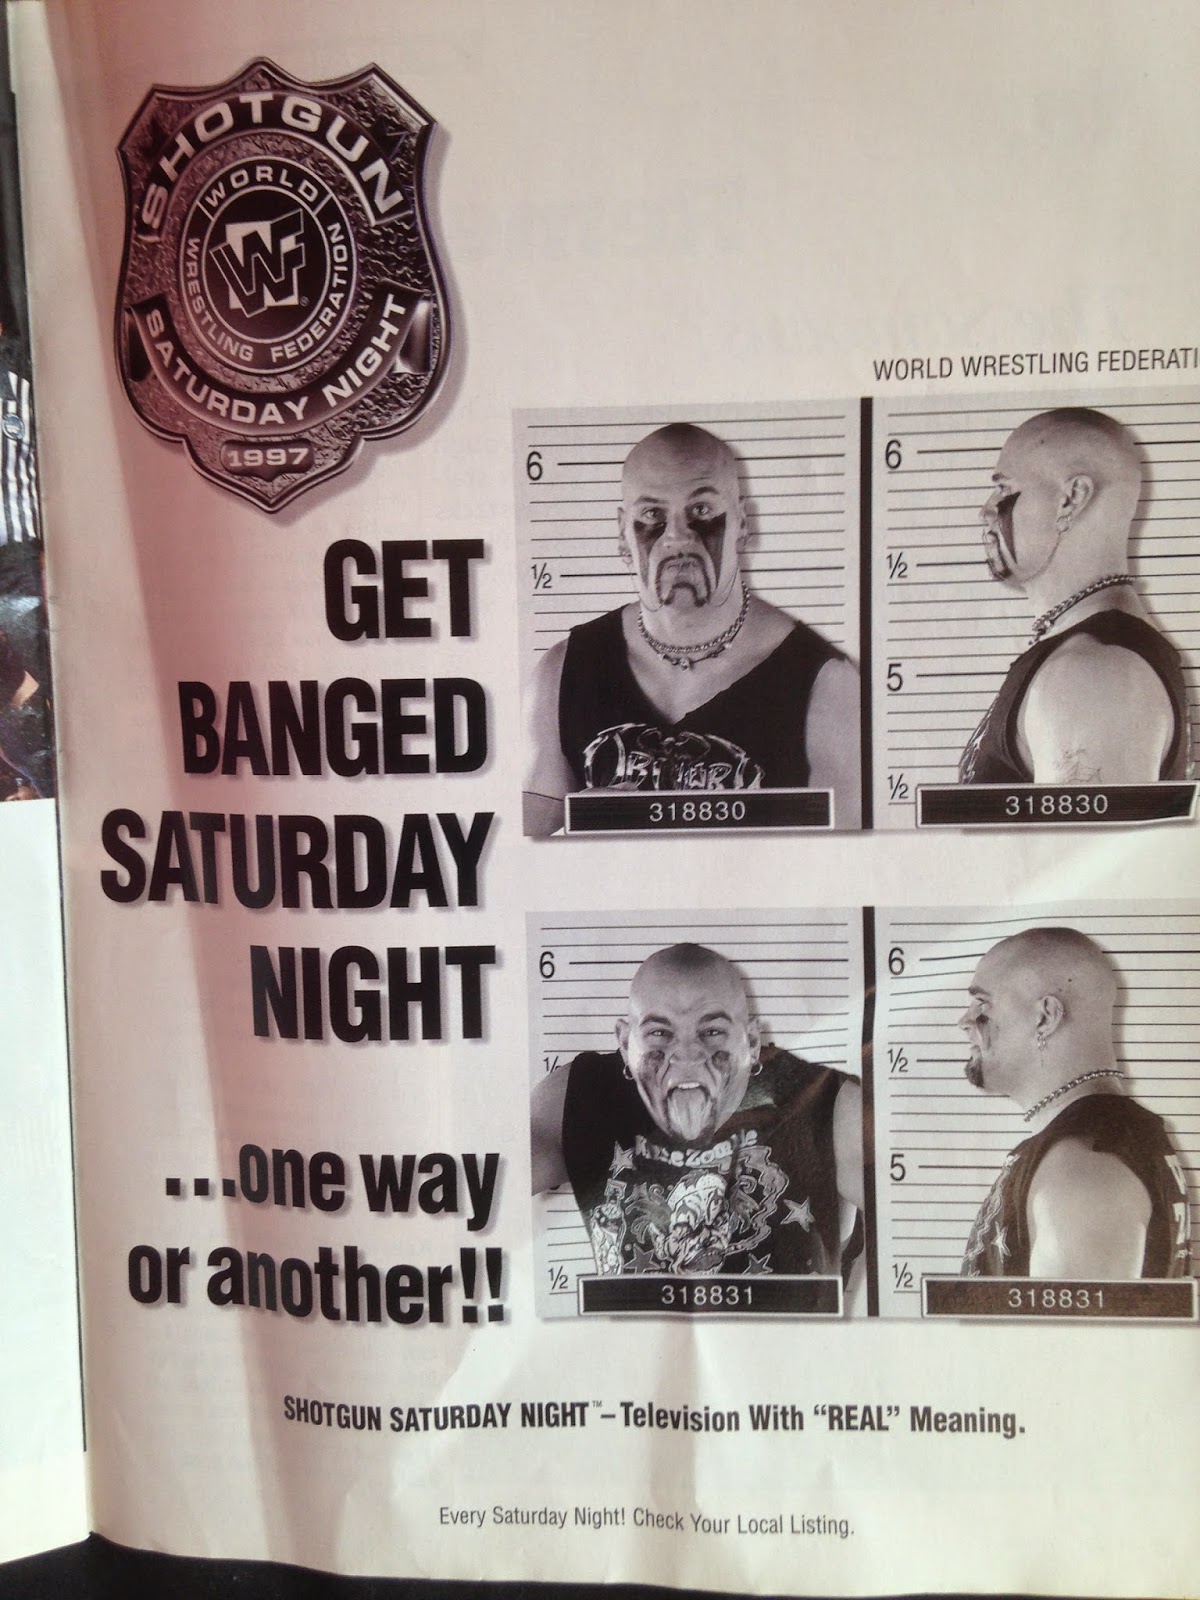 WWE - WWF Raw Magazine - April 1998 - Shotgun Saturday Night ad featuring The Headbangers